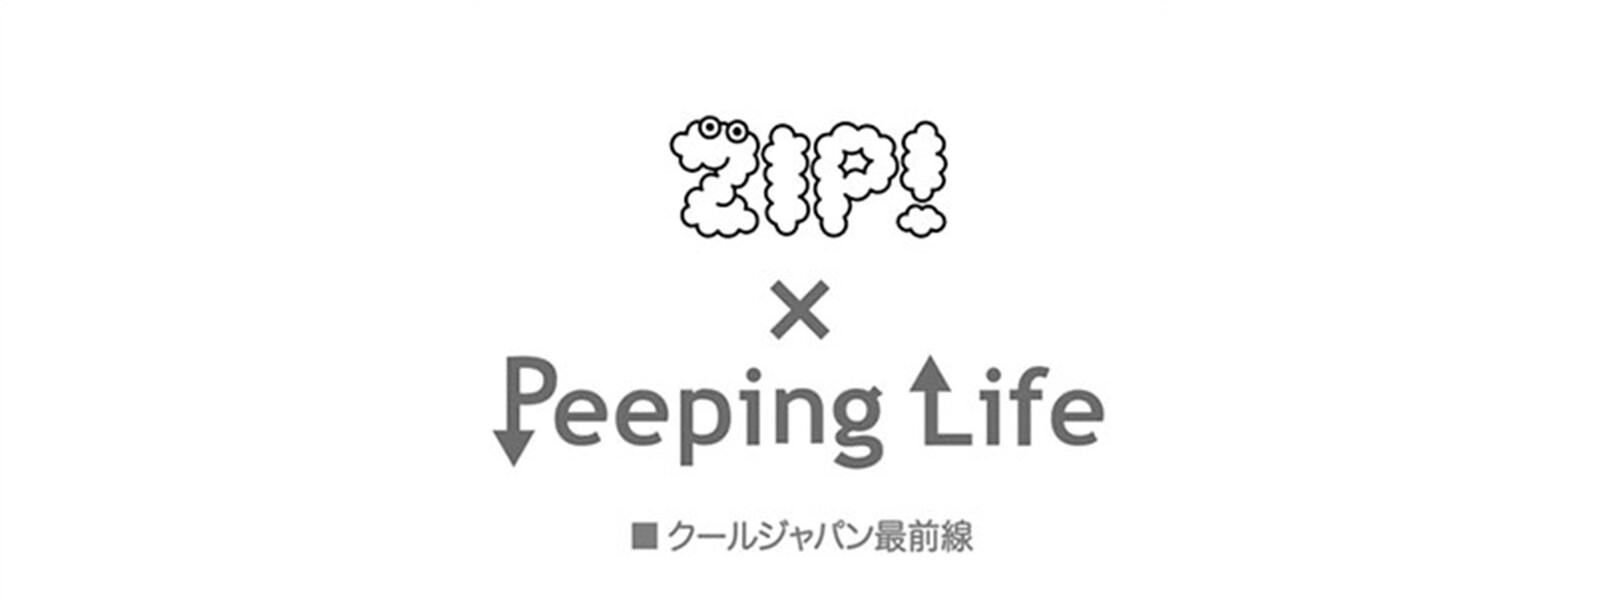 ZIP!×Peeping Life TV クールジャパン最前線 動画